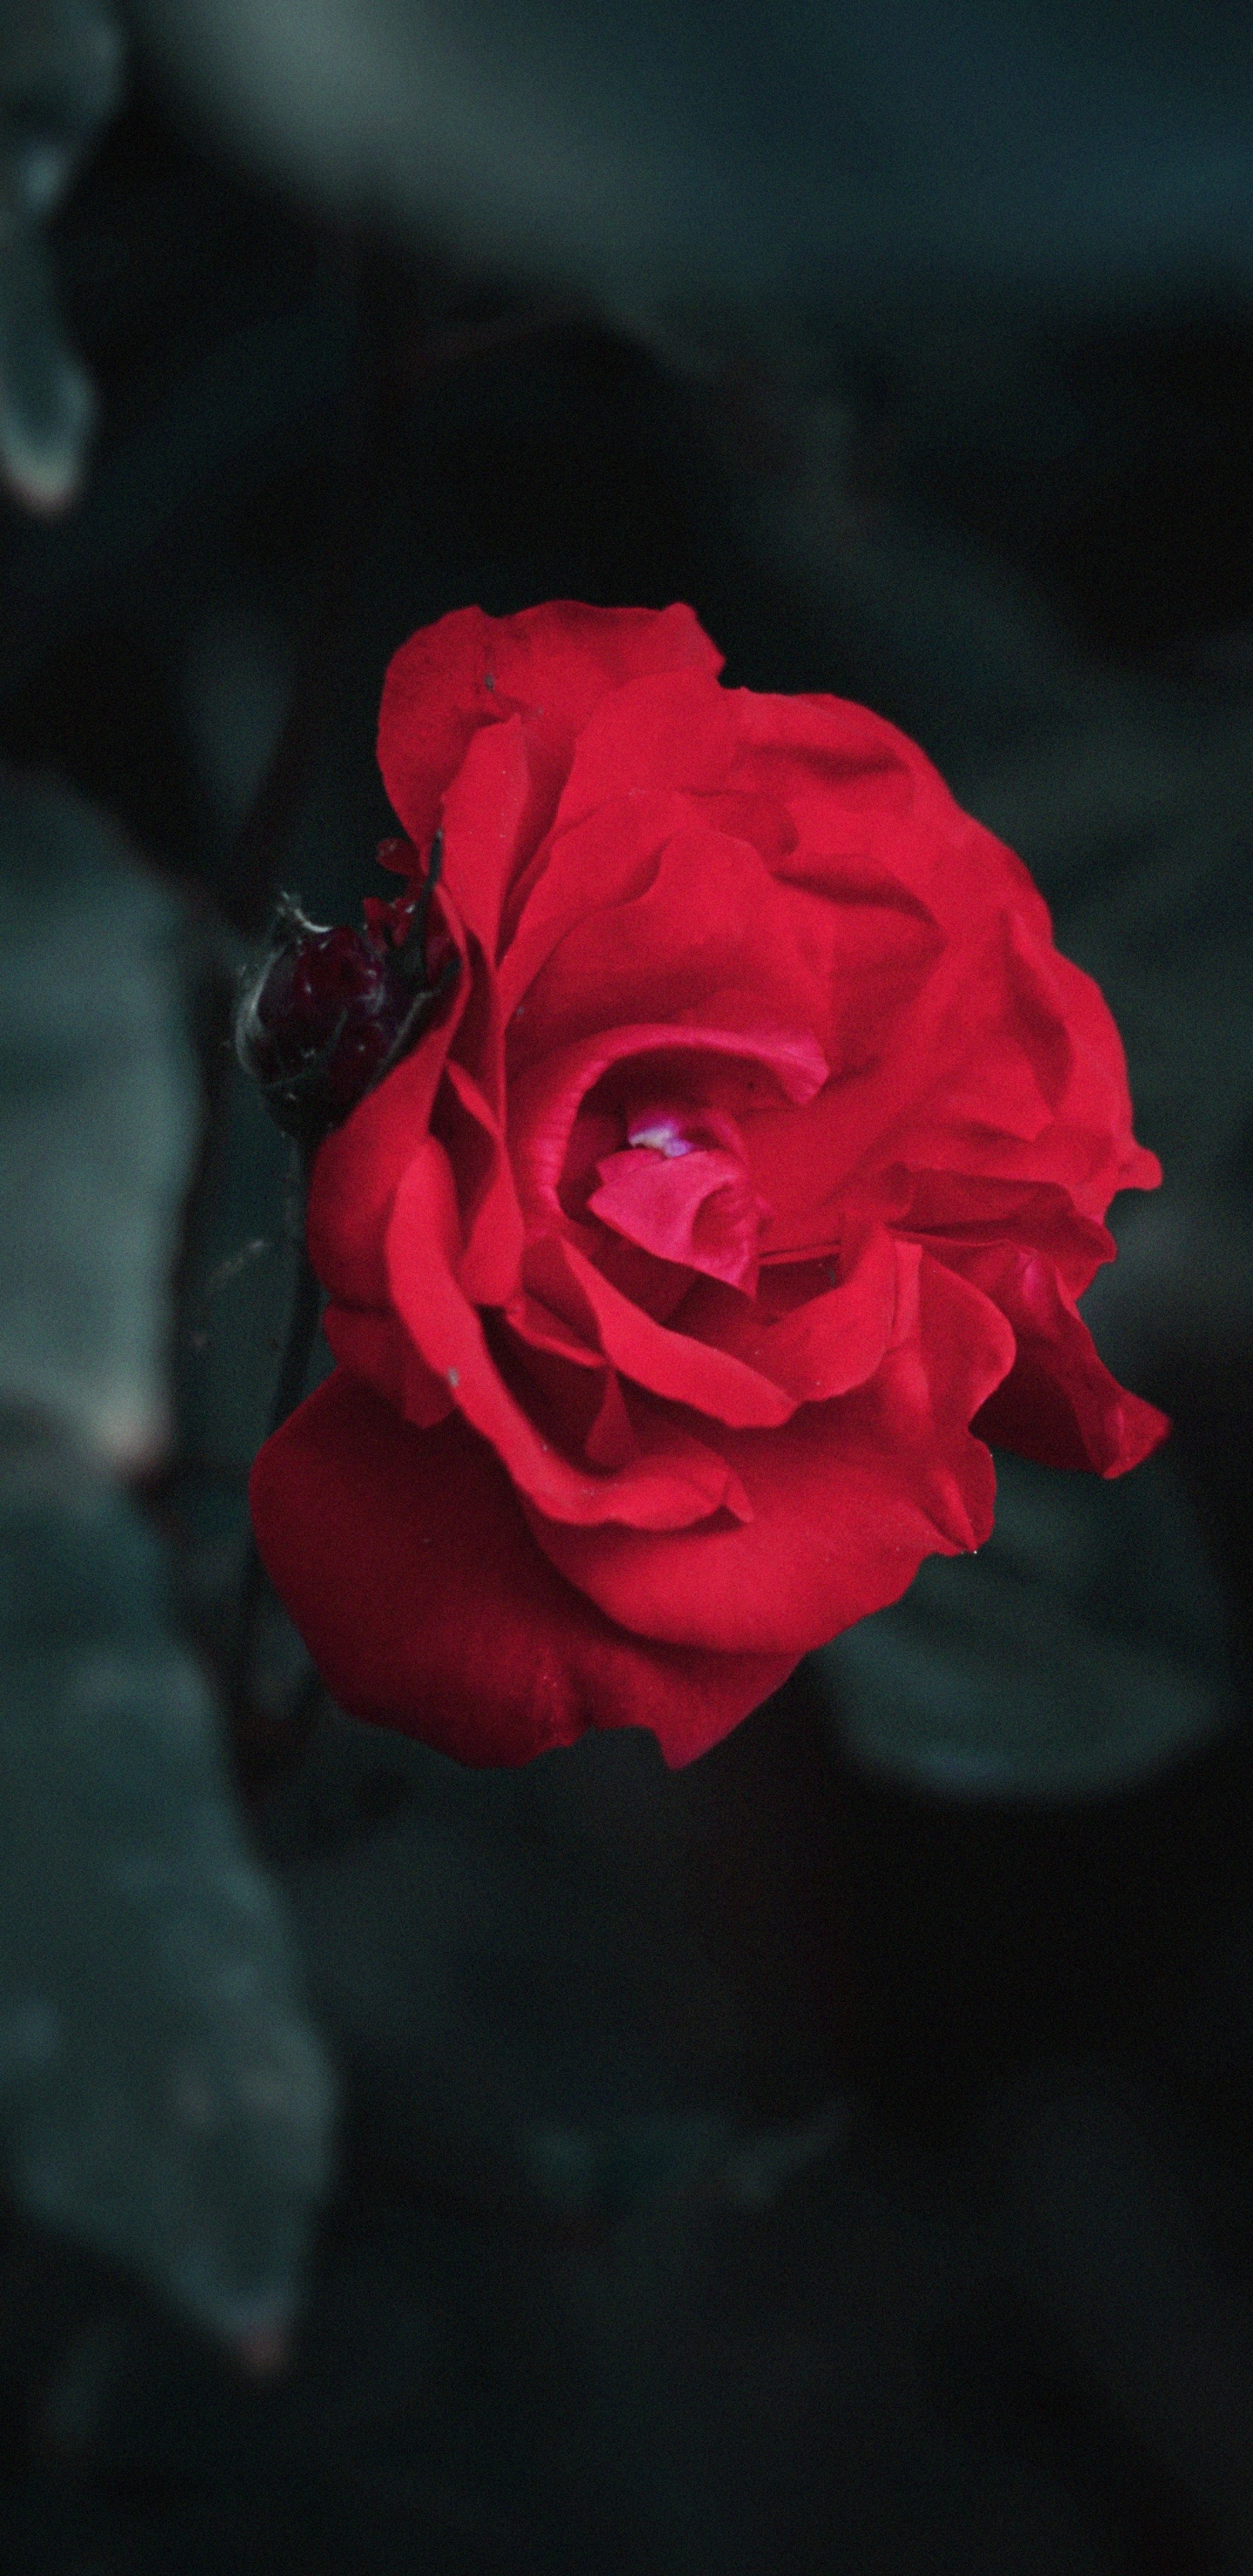 Rose Rouge en Photographie Rapprochée. Wallpaper in 1440x2960 Resolution